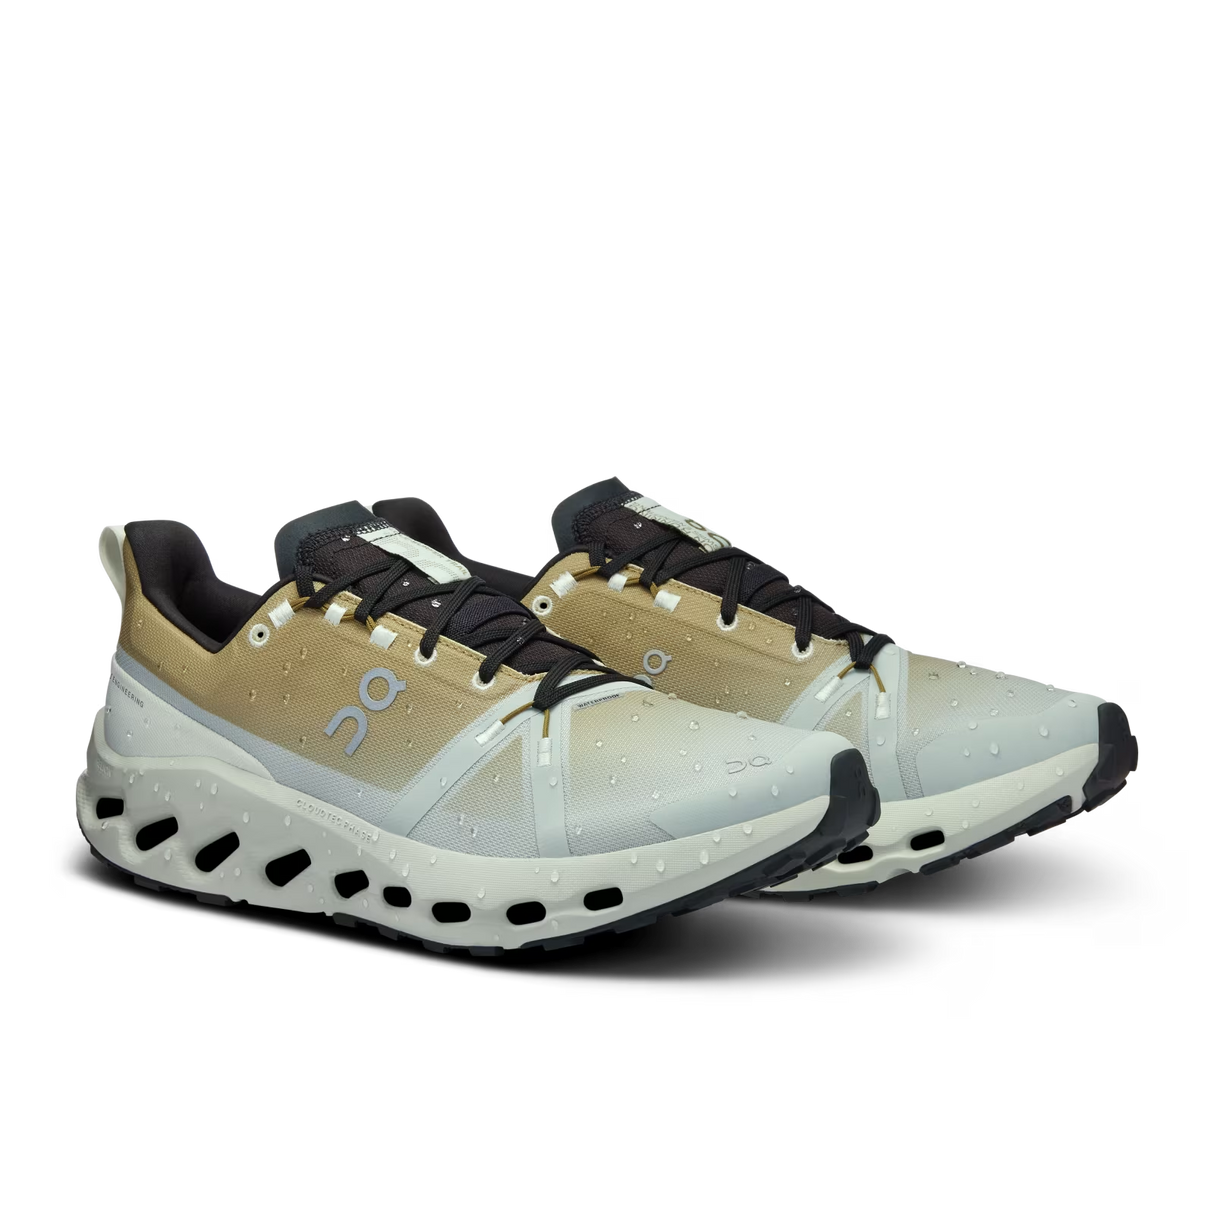 On Men's Cloudsurfer WP Trail Running Shoes - Cam2